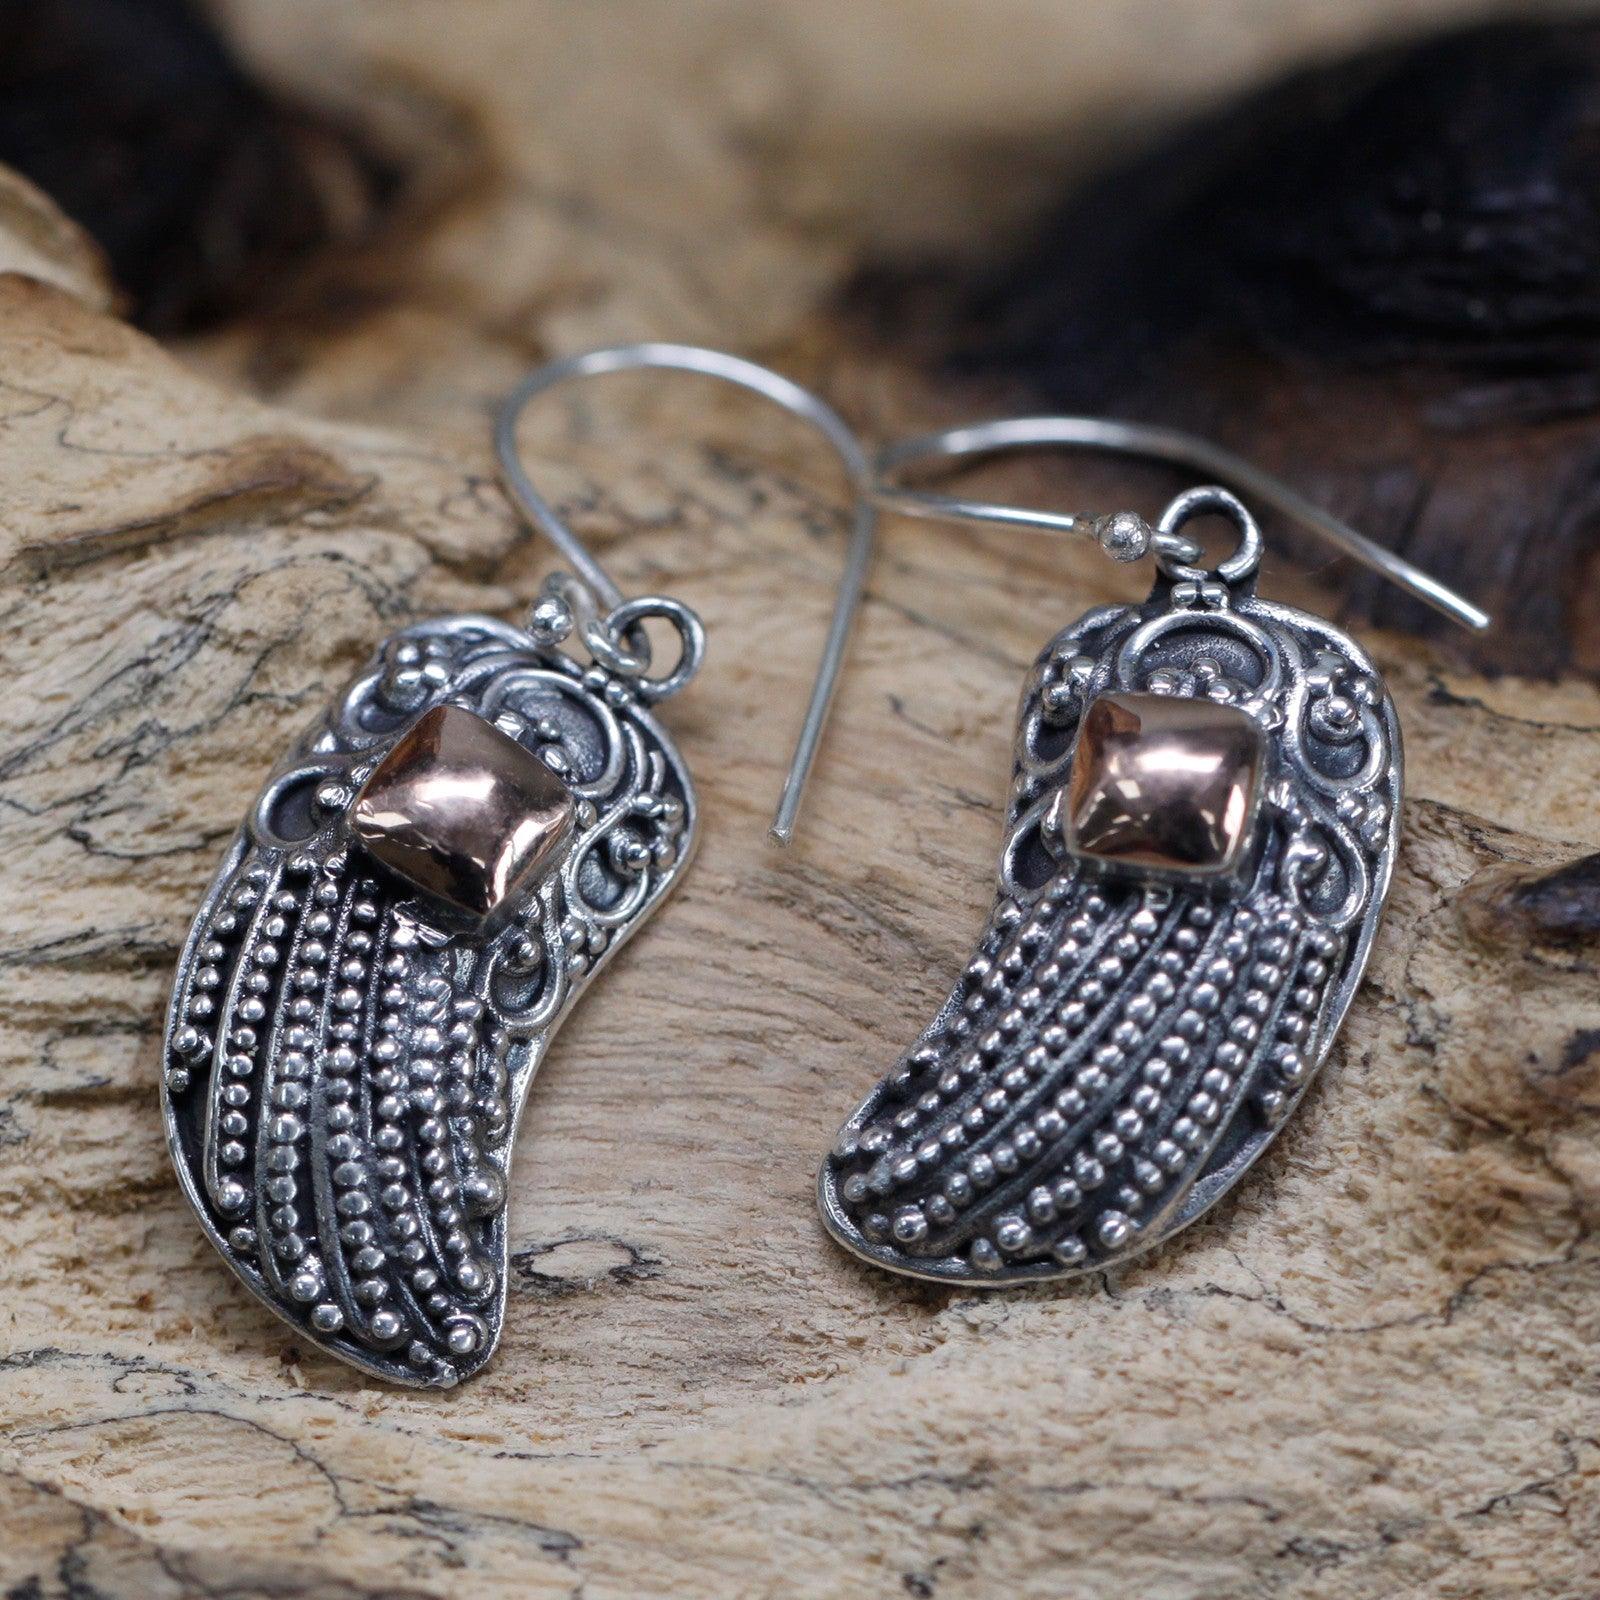 Handmade Bali Jewellery Silver & Gold Earring - Angel Wings - DuvetDay.co.uk